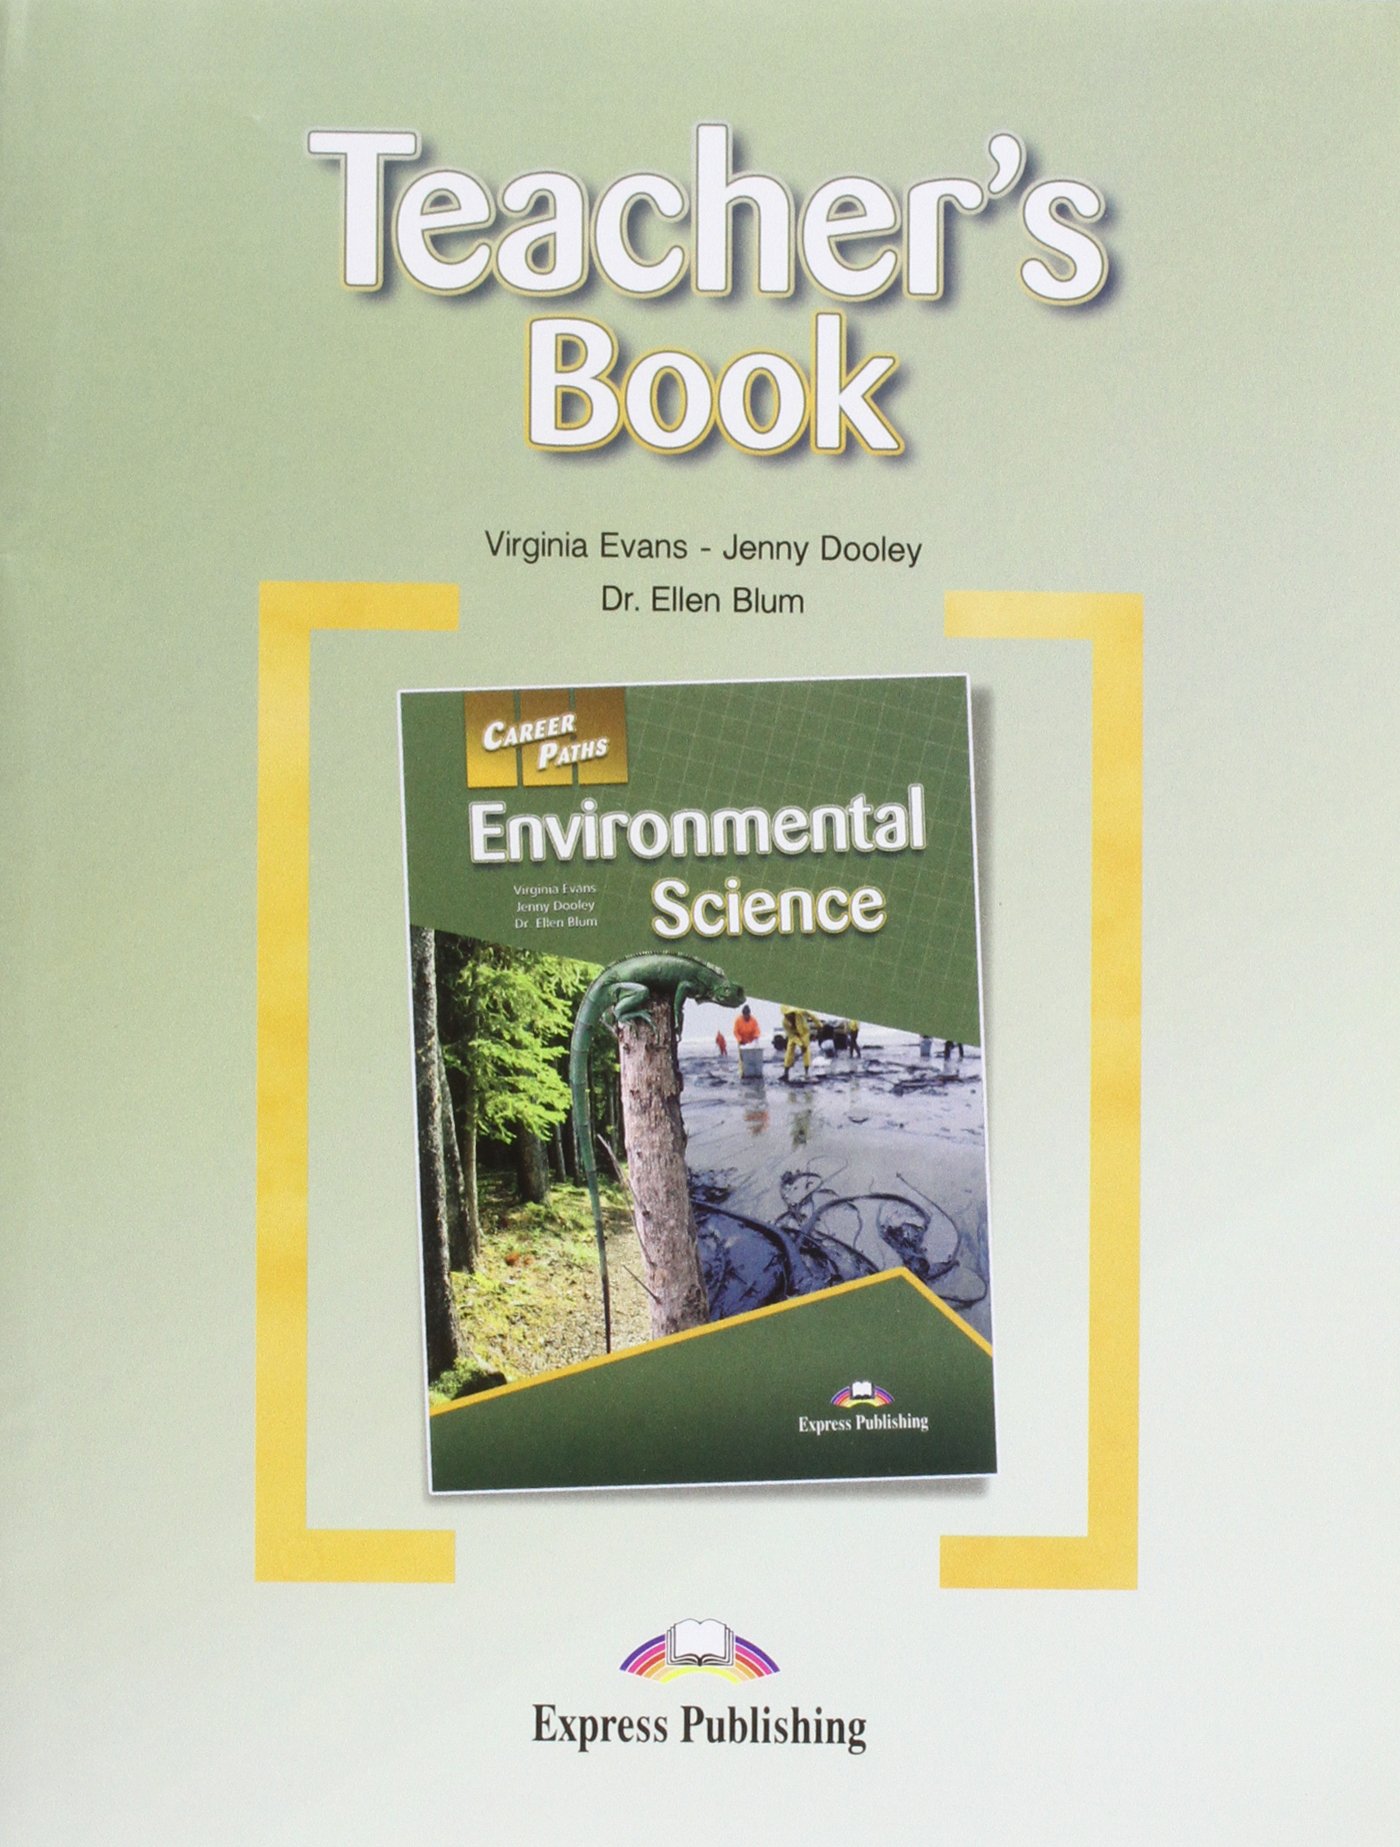 ENVIRONMENTAL SIENCE (CAREER PATHS) Teacher's Book